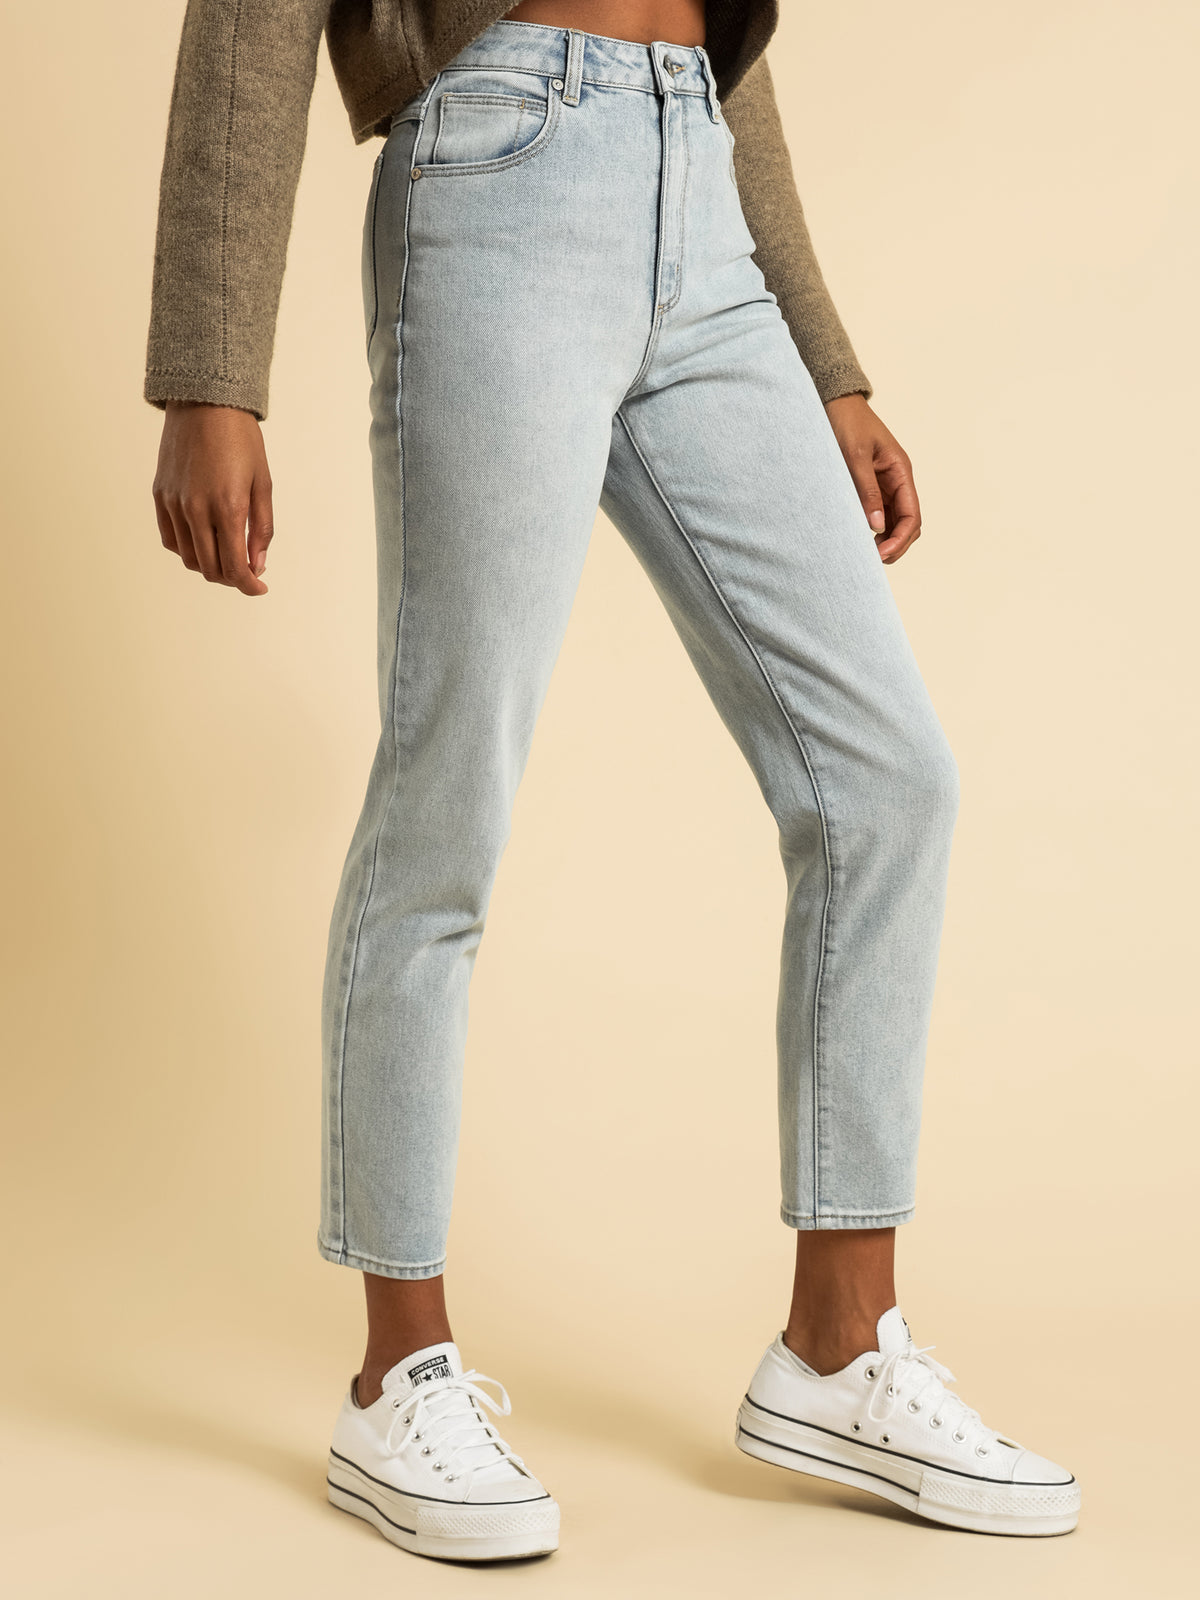 A 94 High Slim Jeans in Pamela